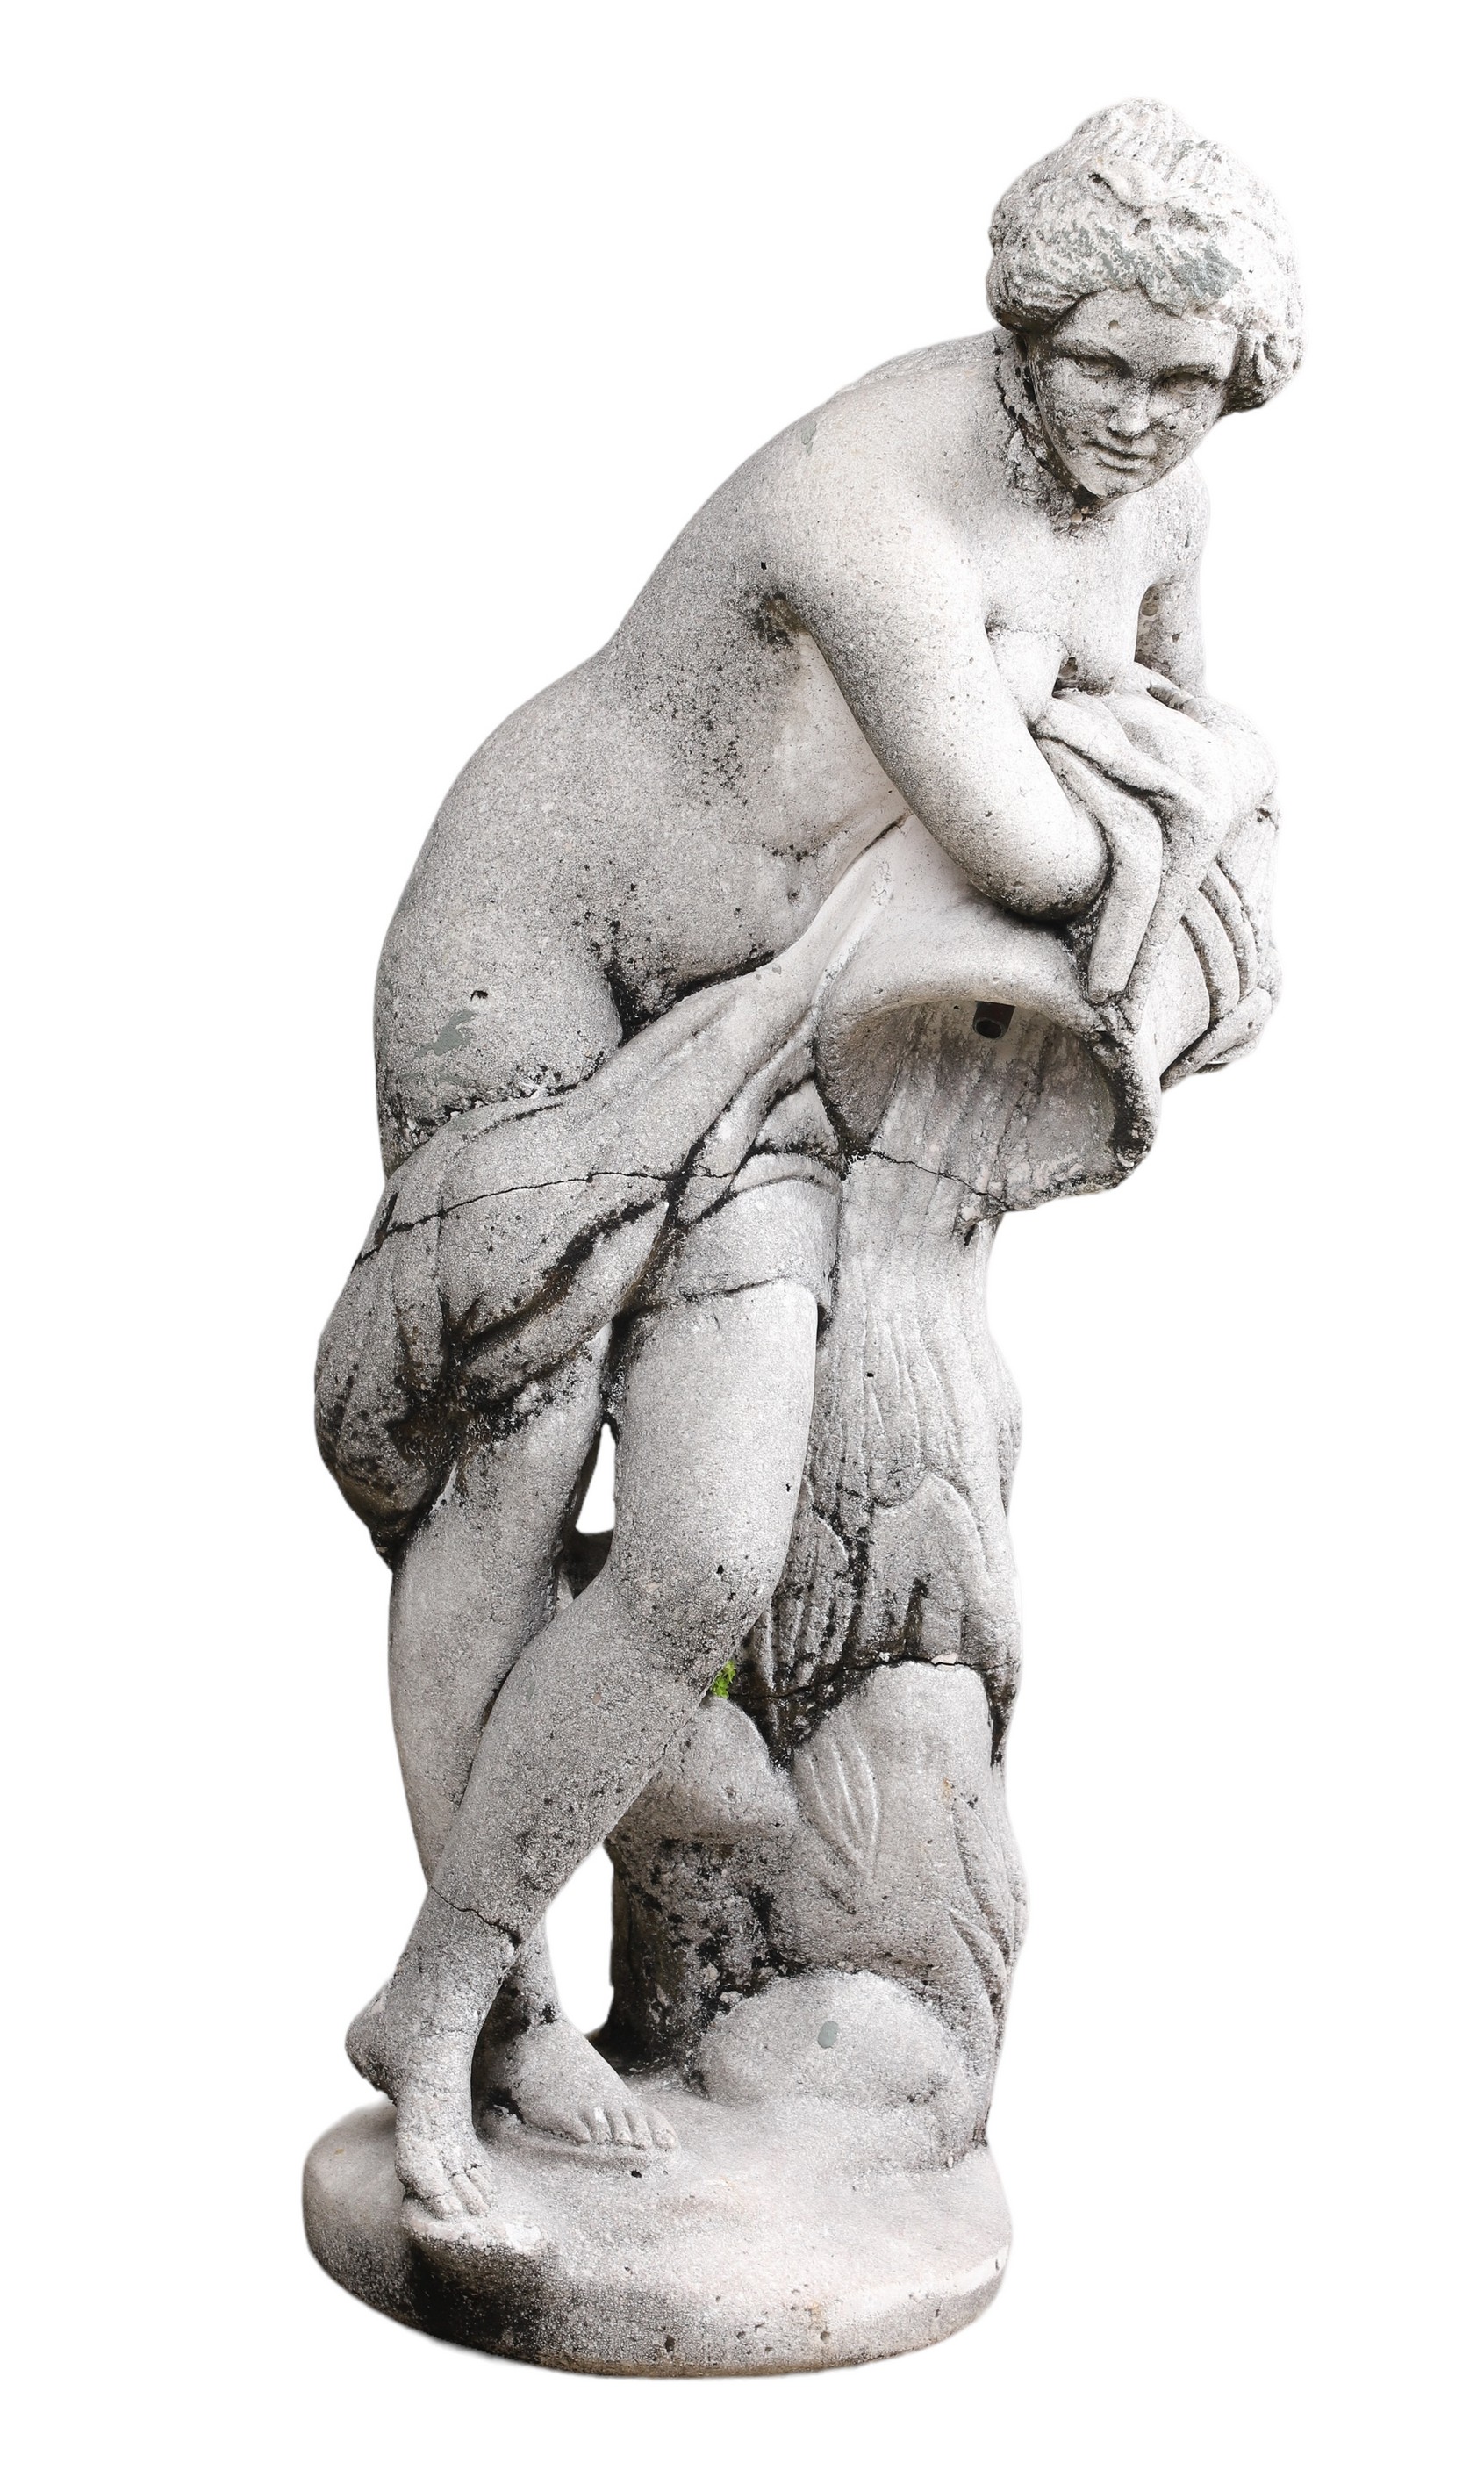 Cement garden statue of nude maiden